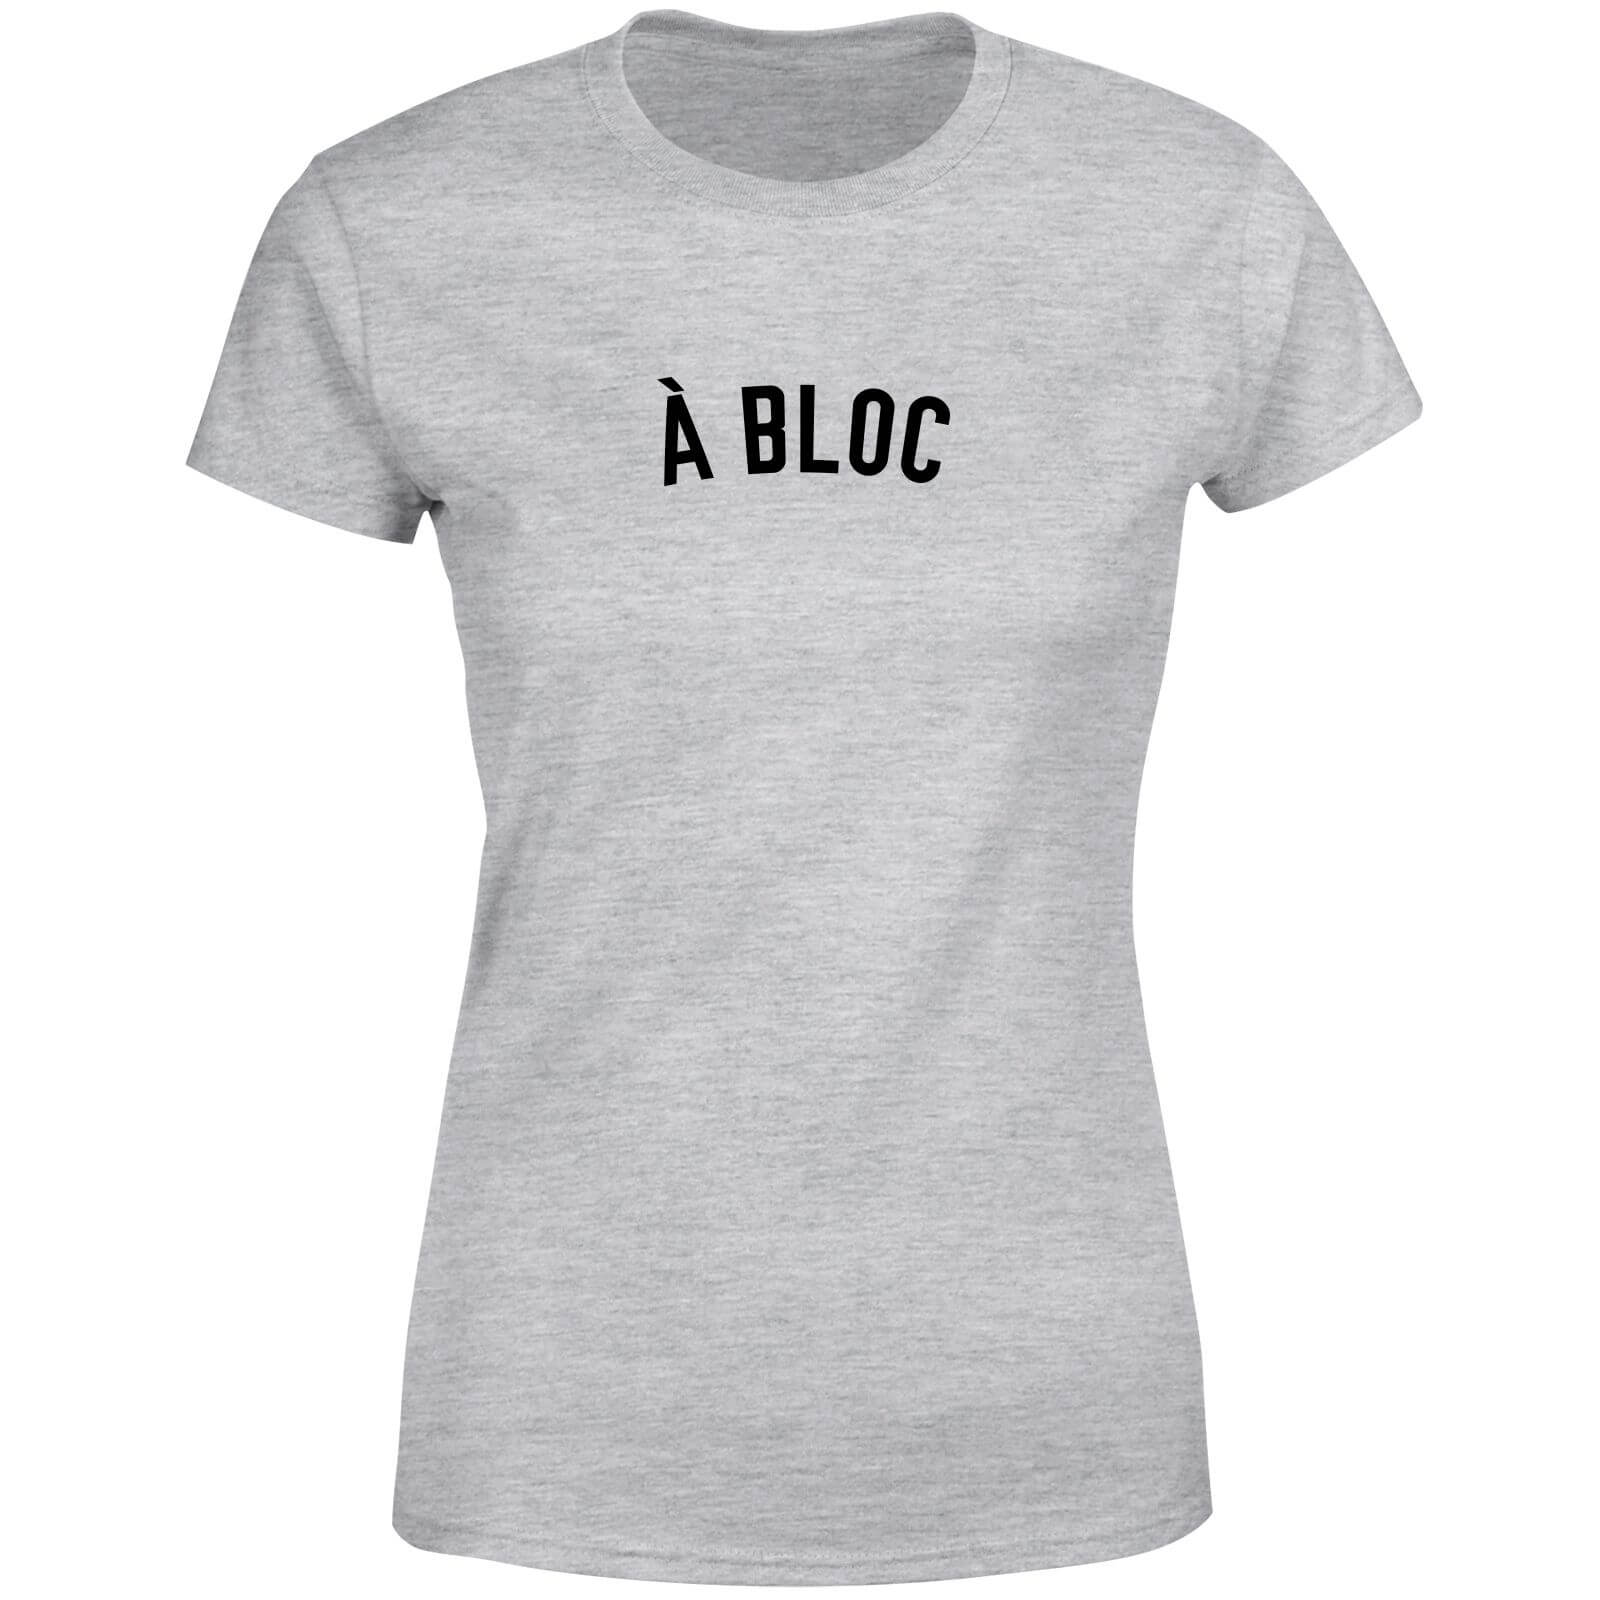 A Bloc Women's T-Shirt - Grey - 3XL - Grey